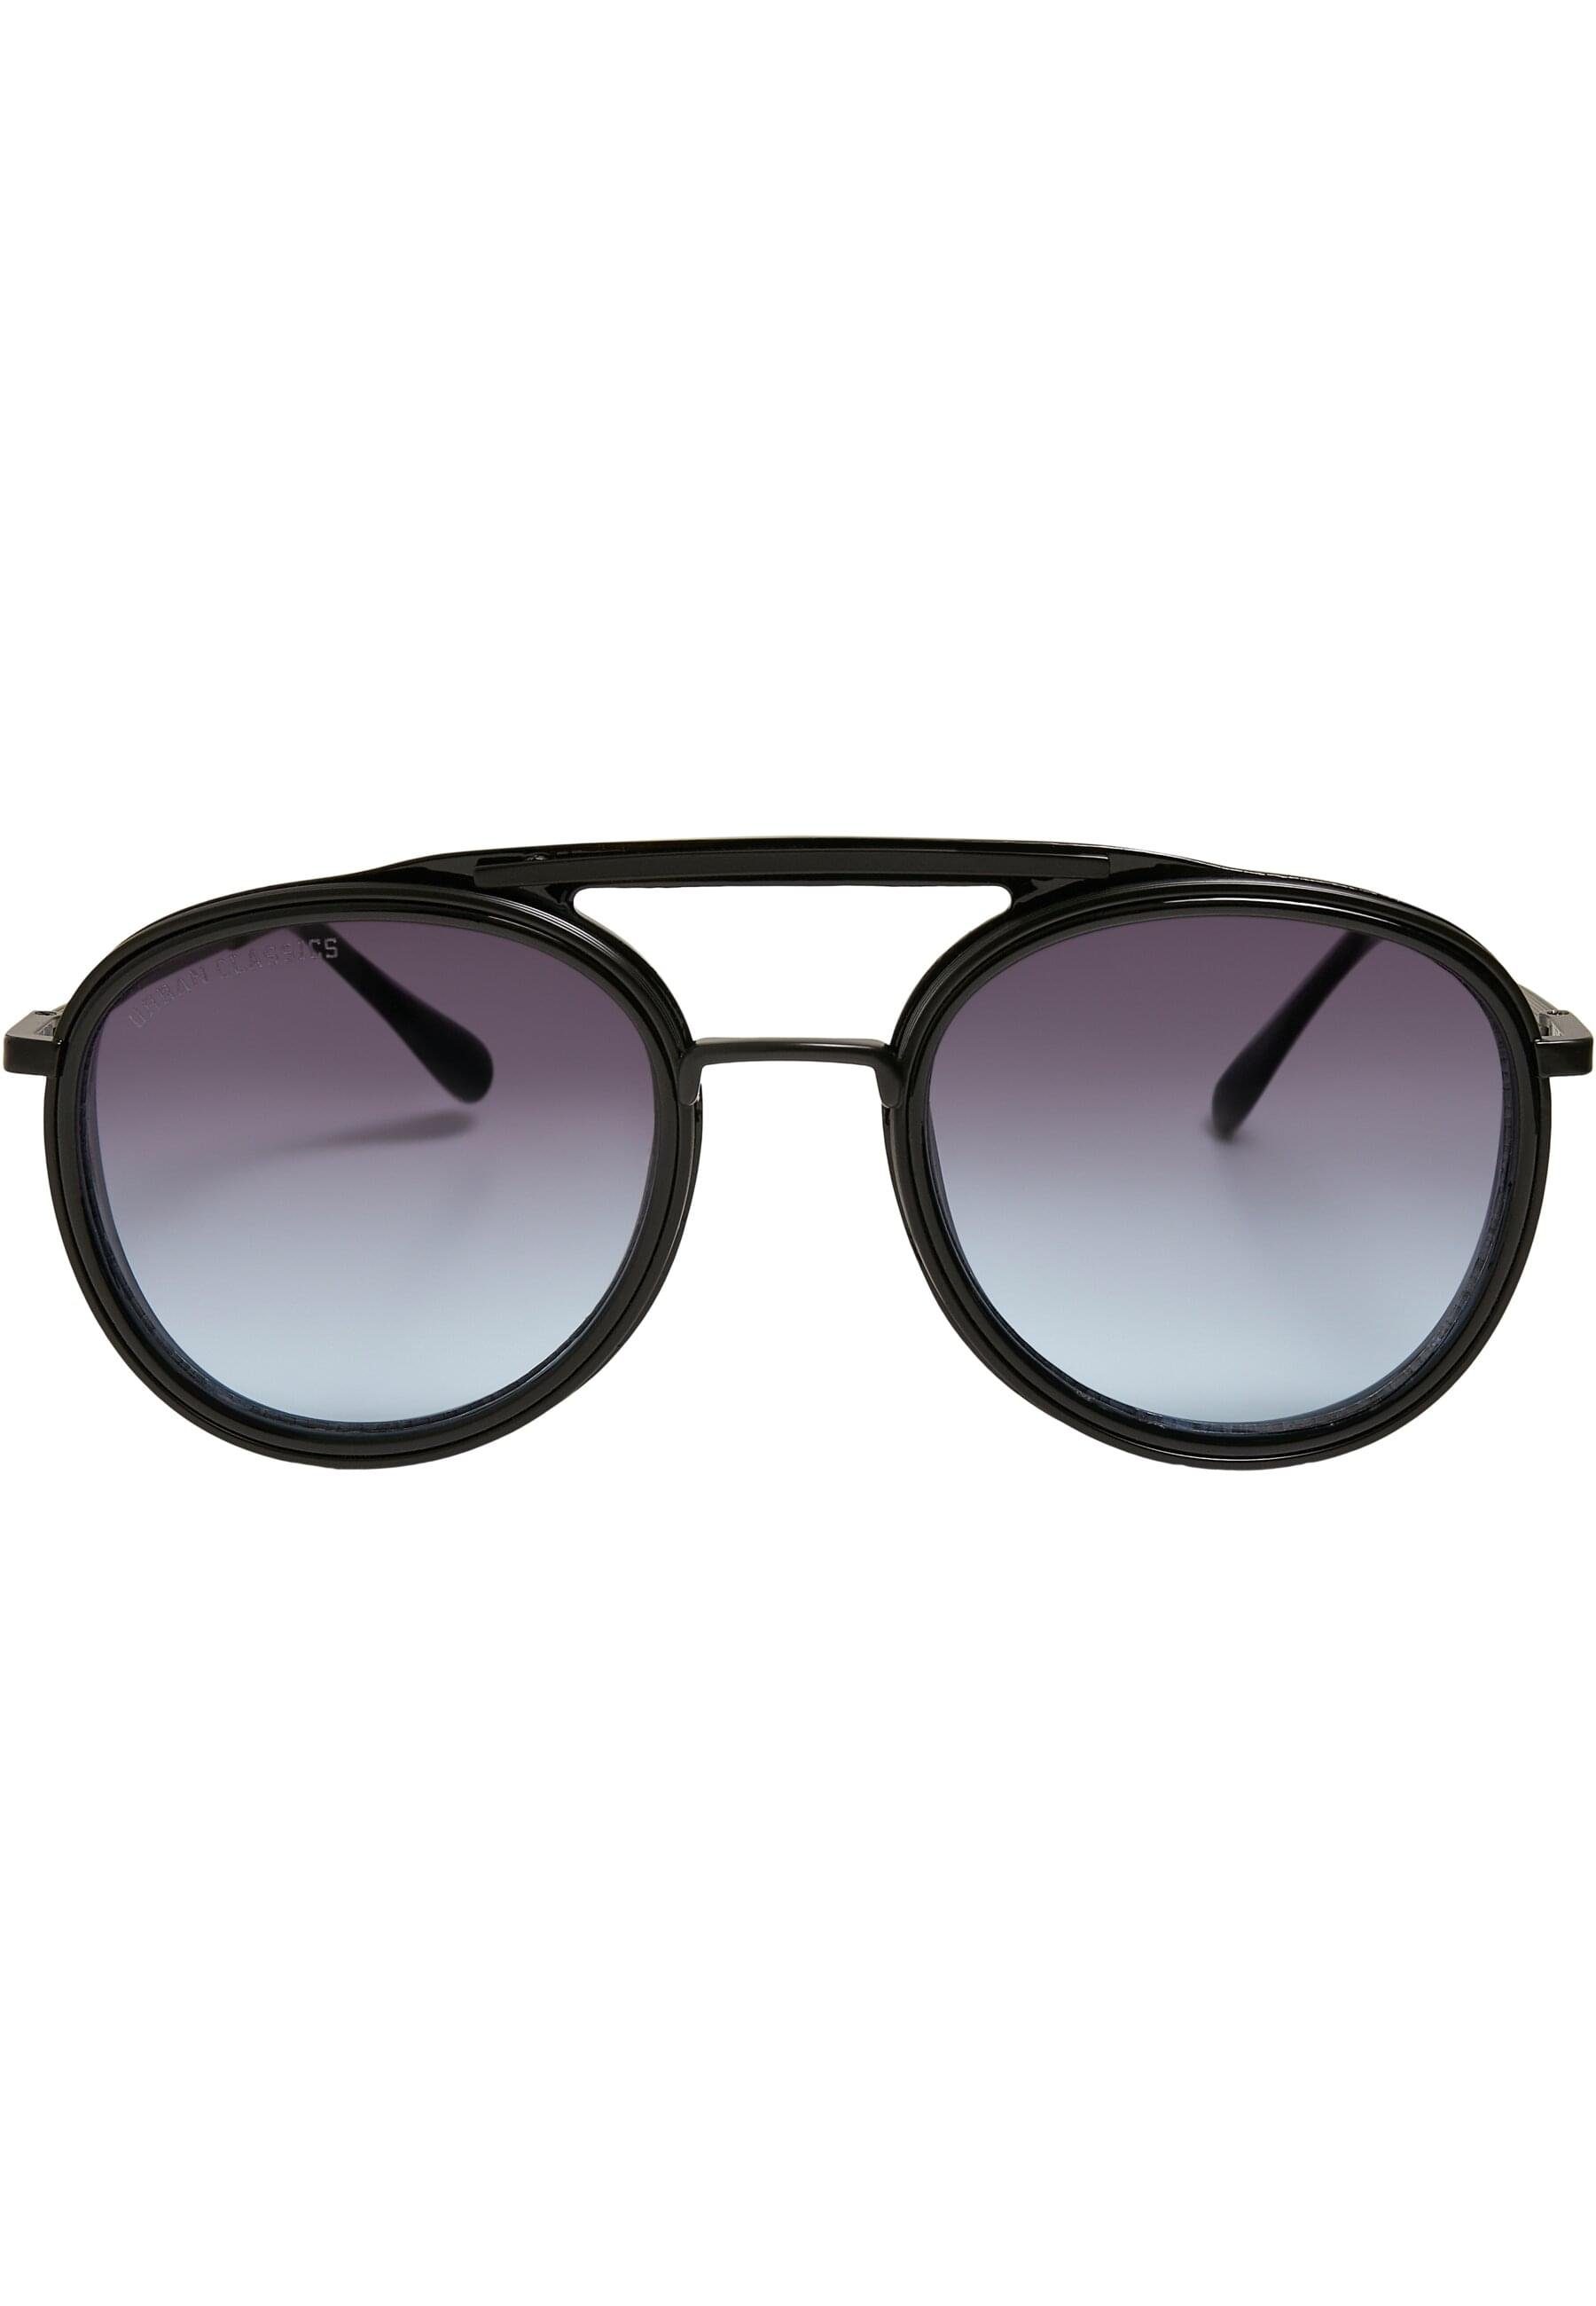 URBAN Sonnenbrille CLASSICS Sunglasses Unisex Ibiza